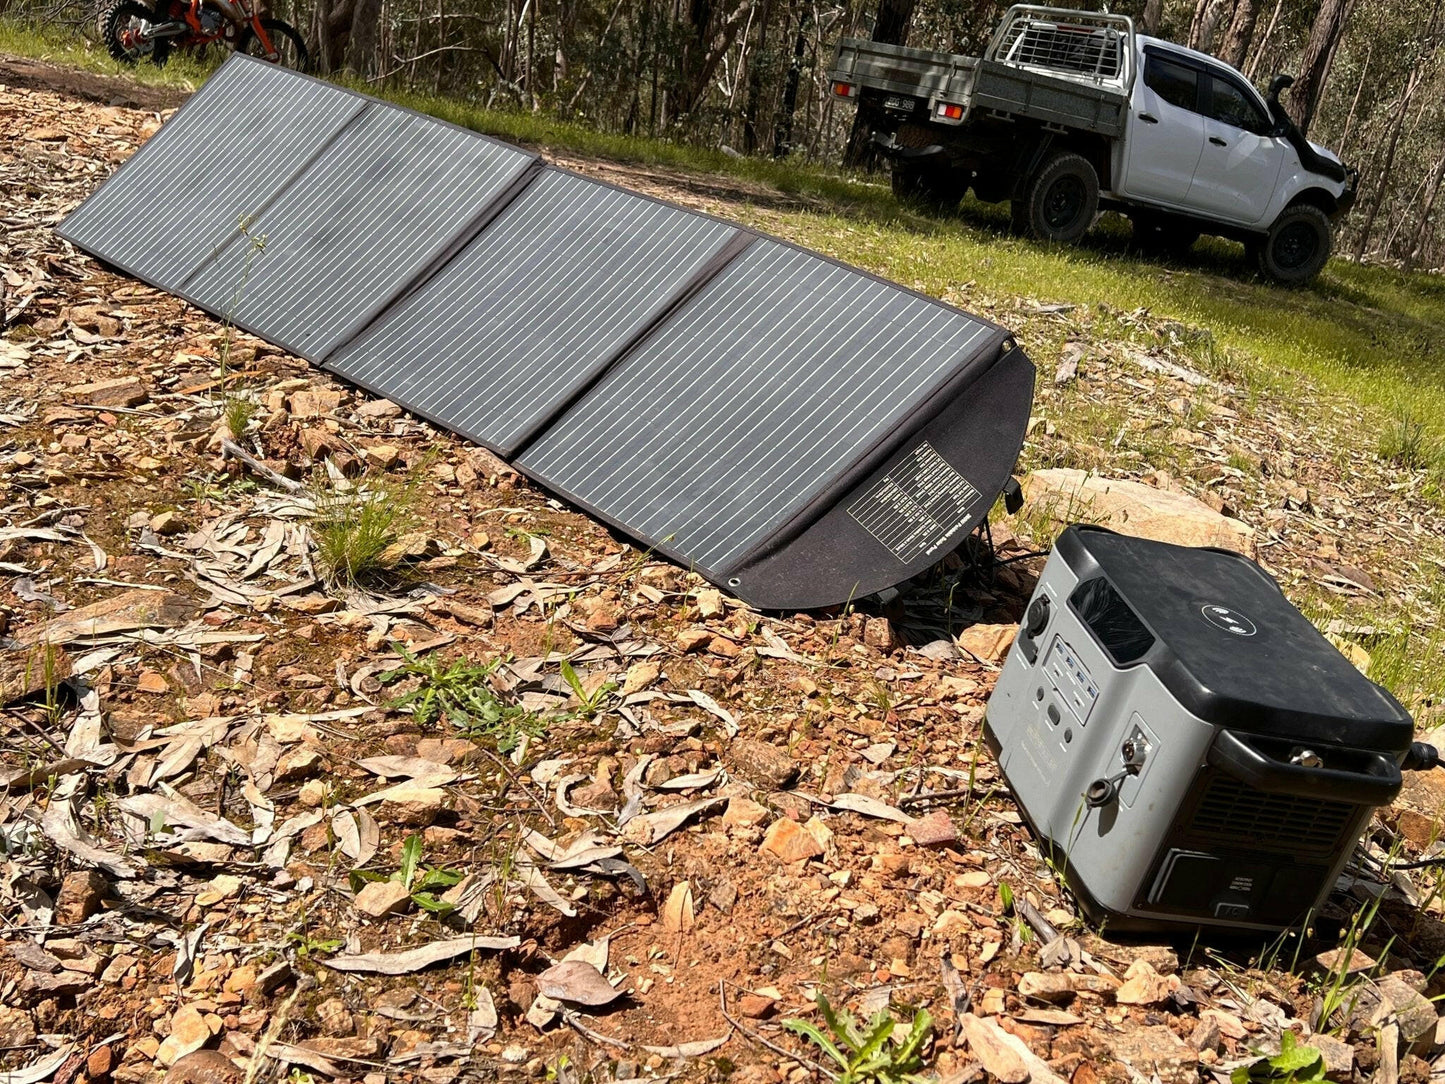 SR Portables Minotaur 1395wh 116ah Portable Lithium Battery Solar Generator / UPS Plus 200w Solar Panel - MINO-200W 1